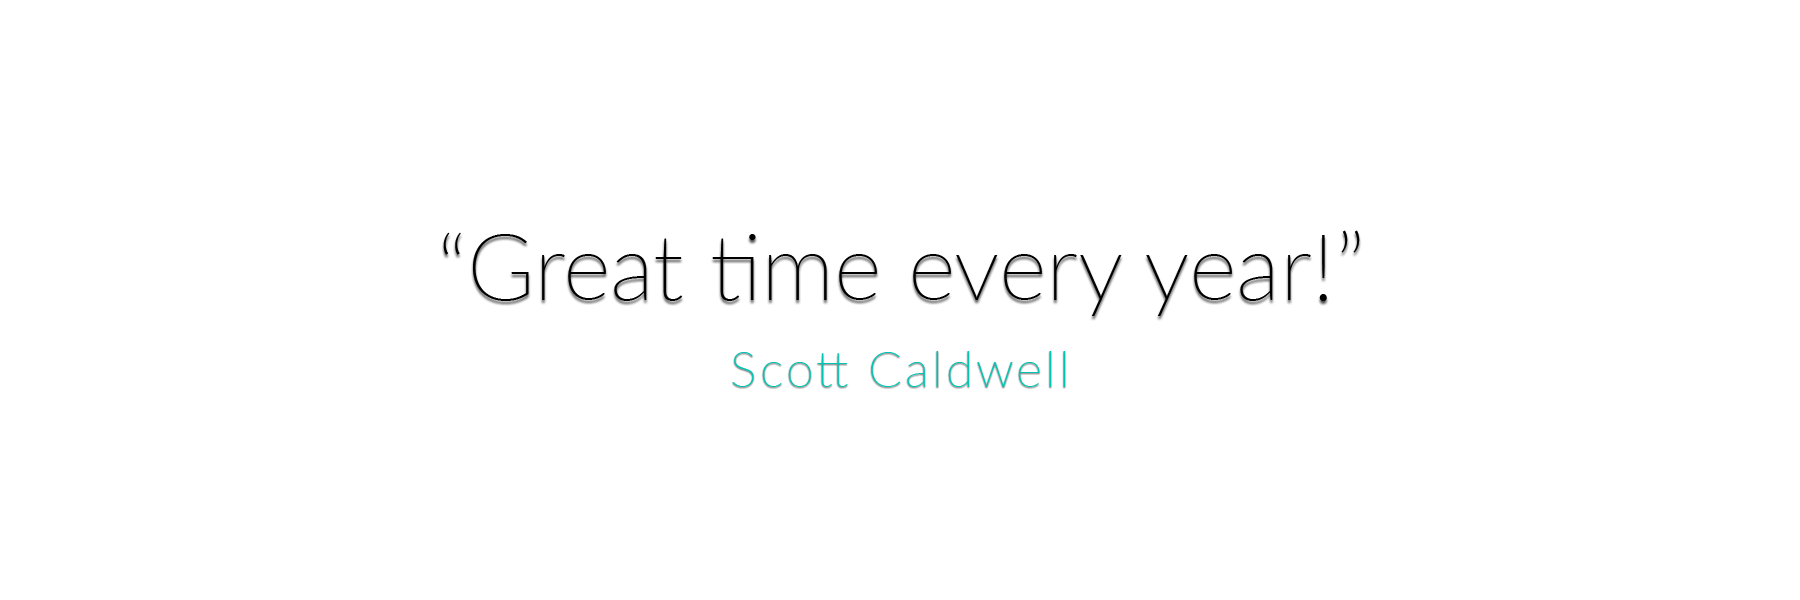 Scott Caldwell Testimonial